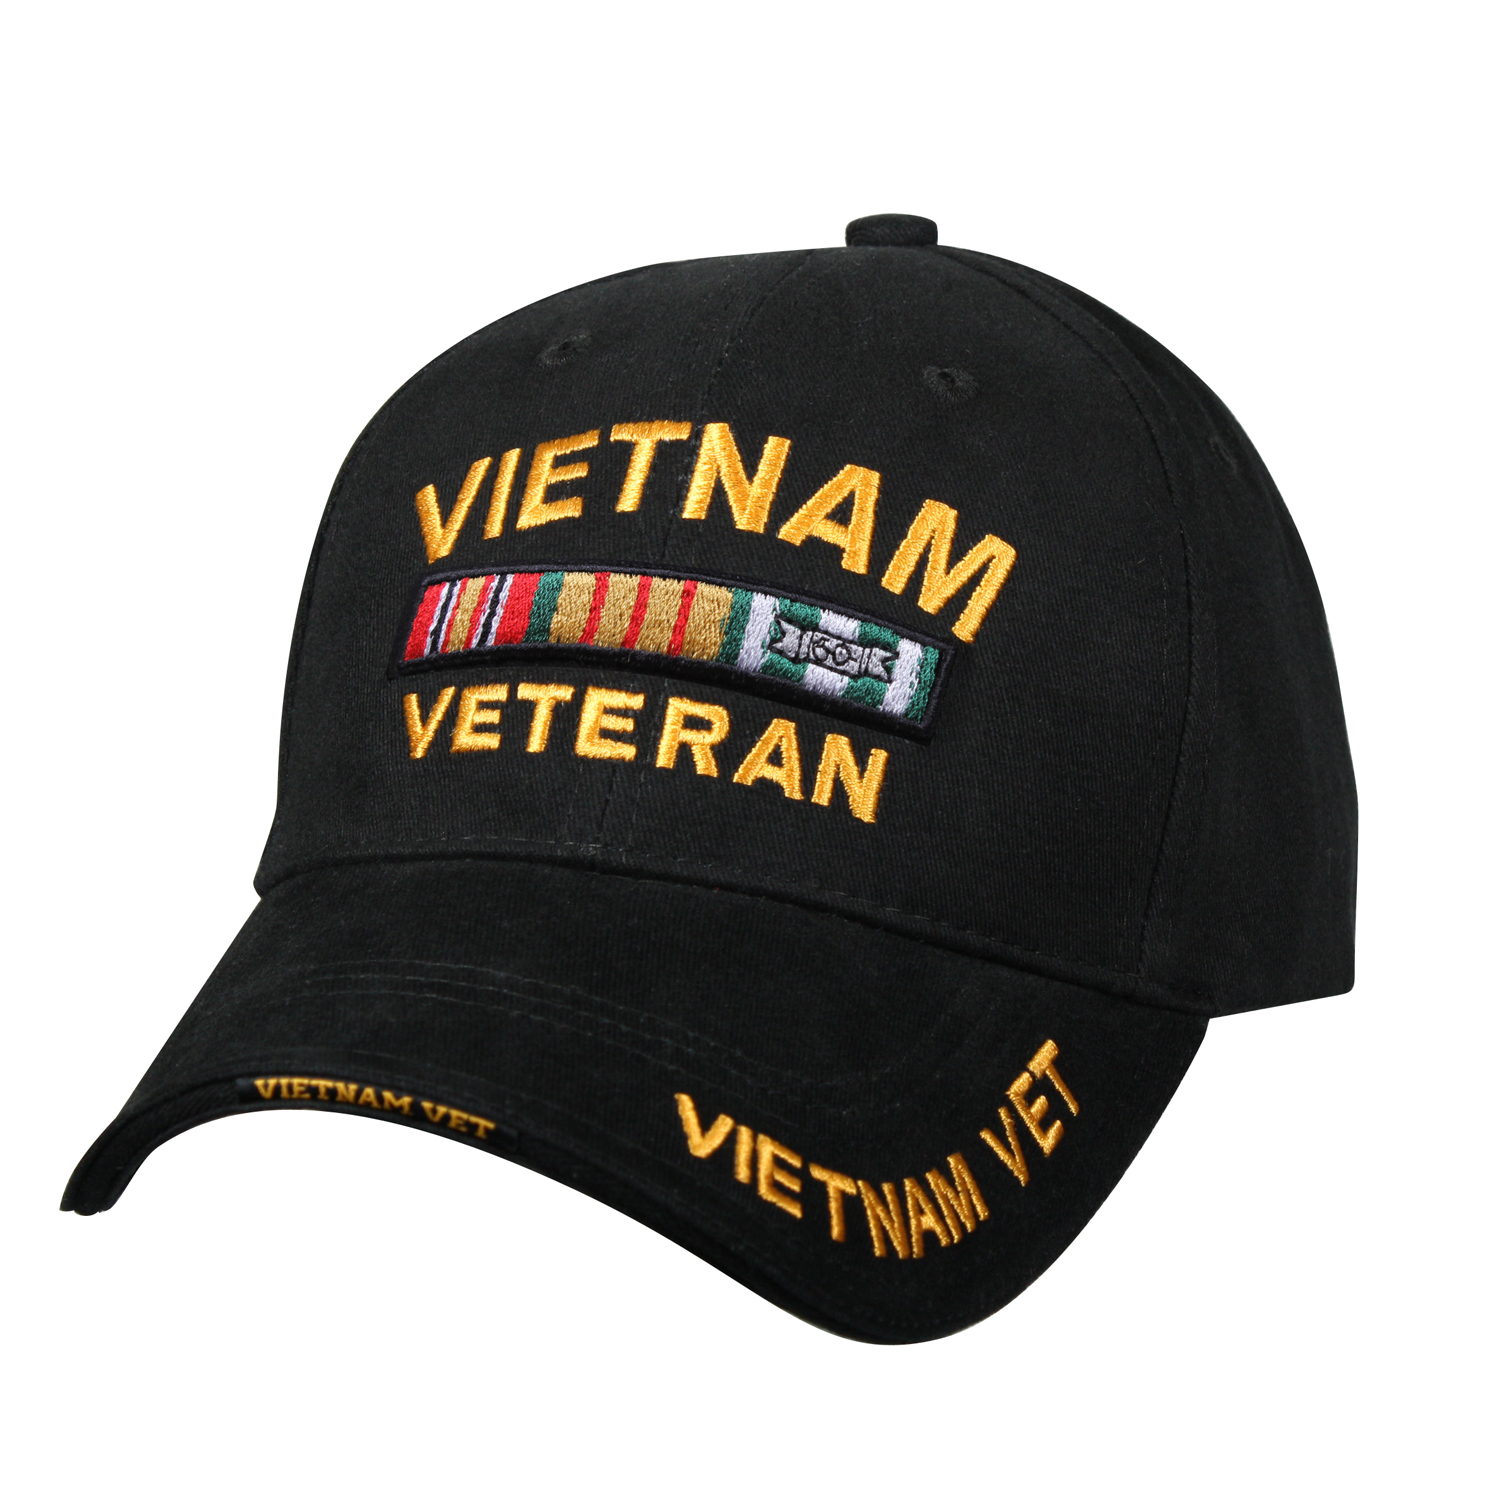 Rothco Deluxe Low Profile Vietnam Veteran Insignia Cap